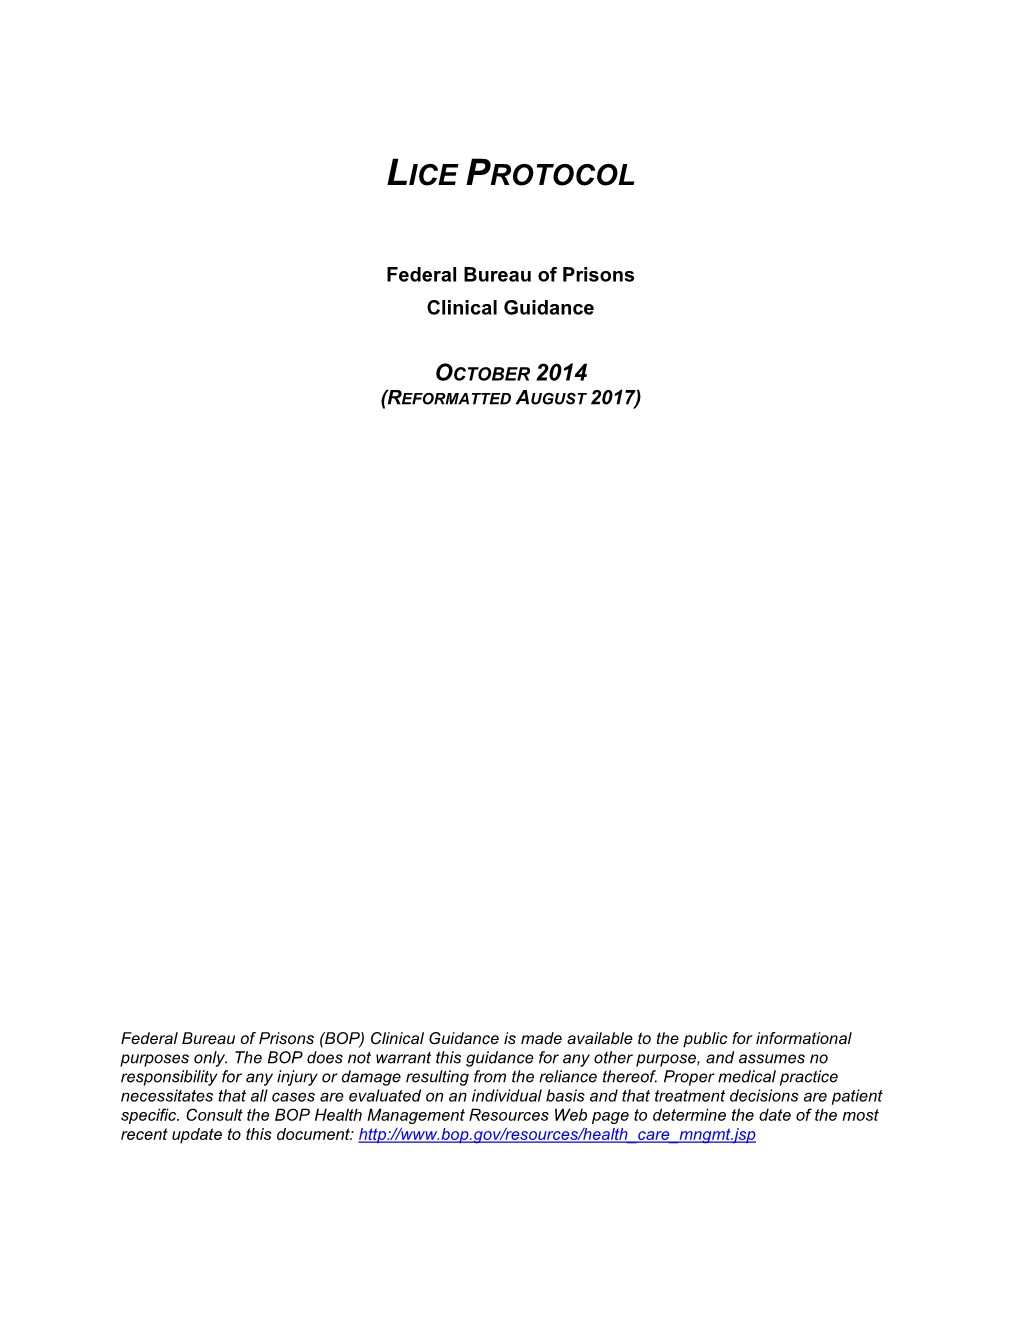 Lice Protocol